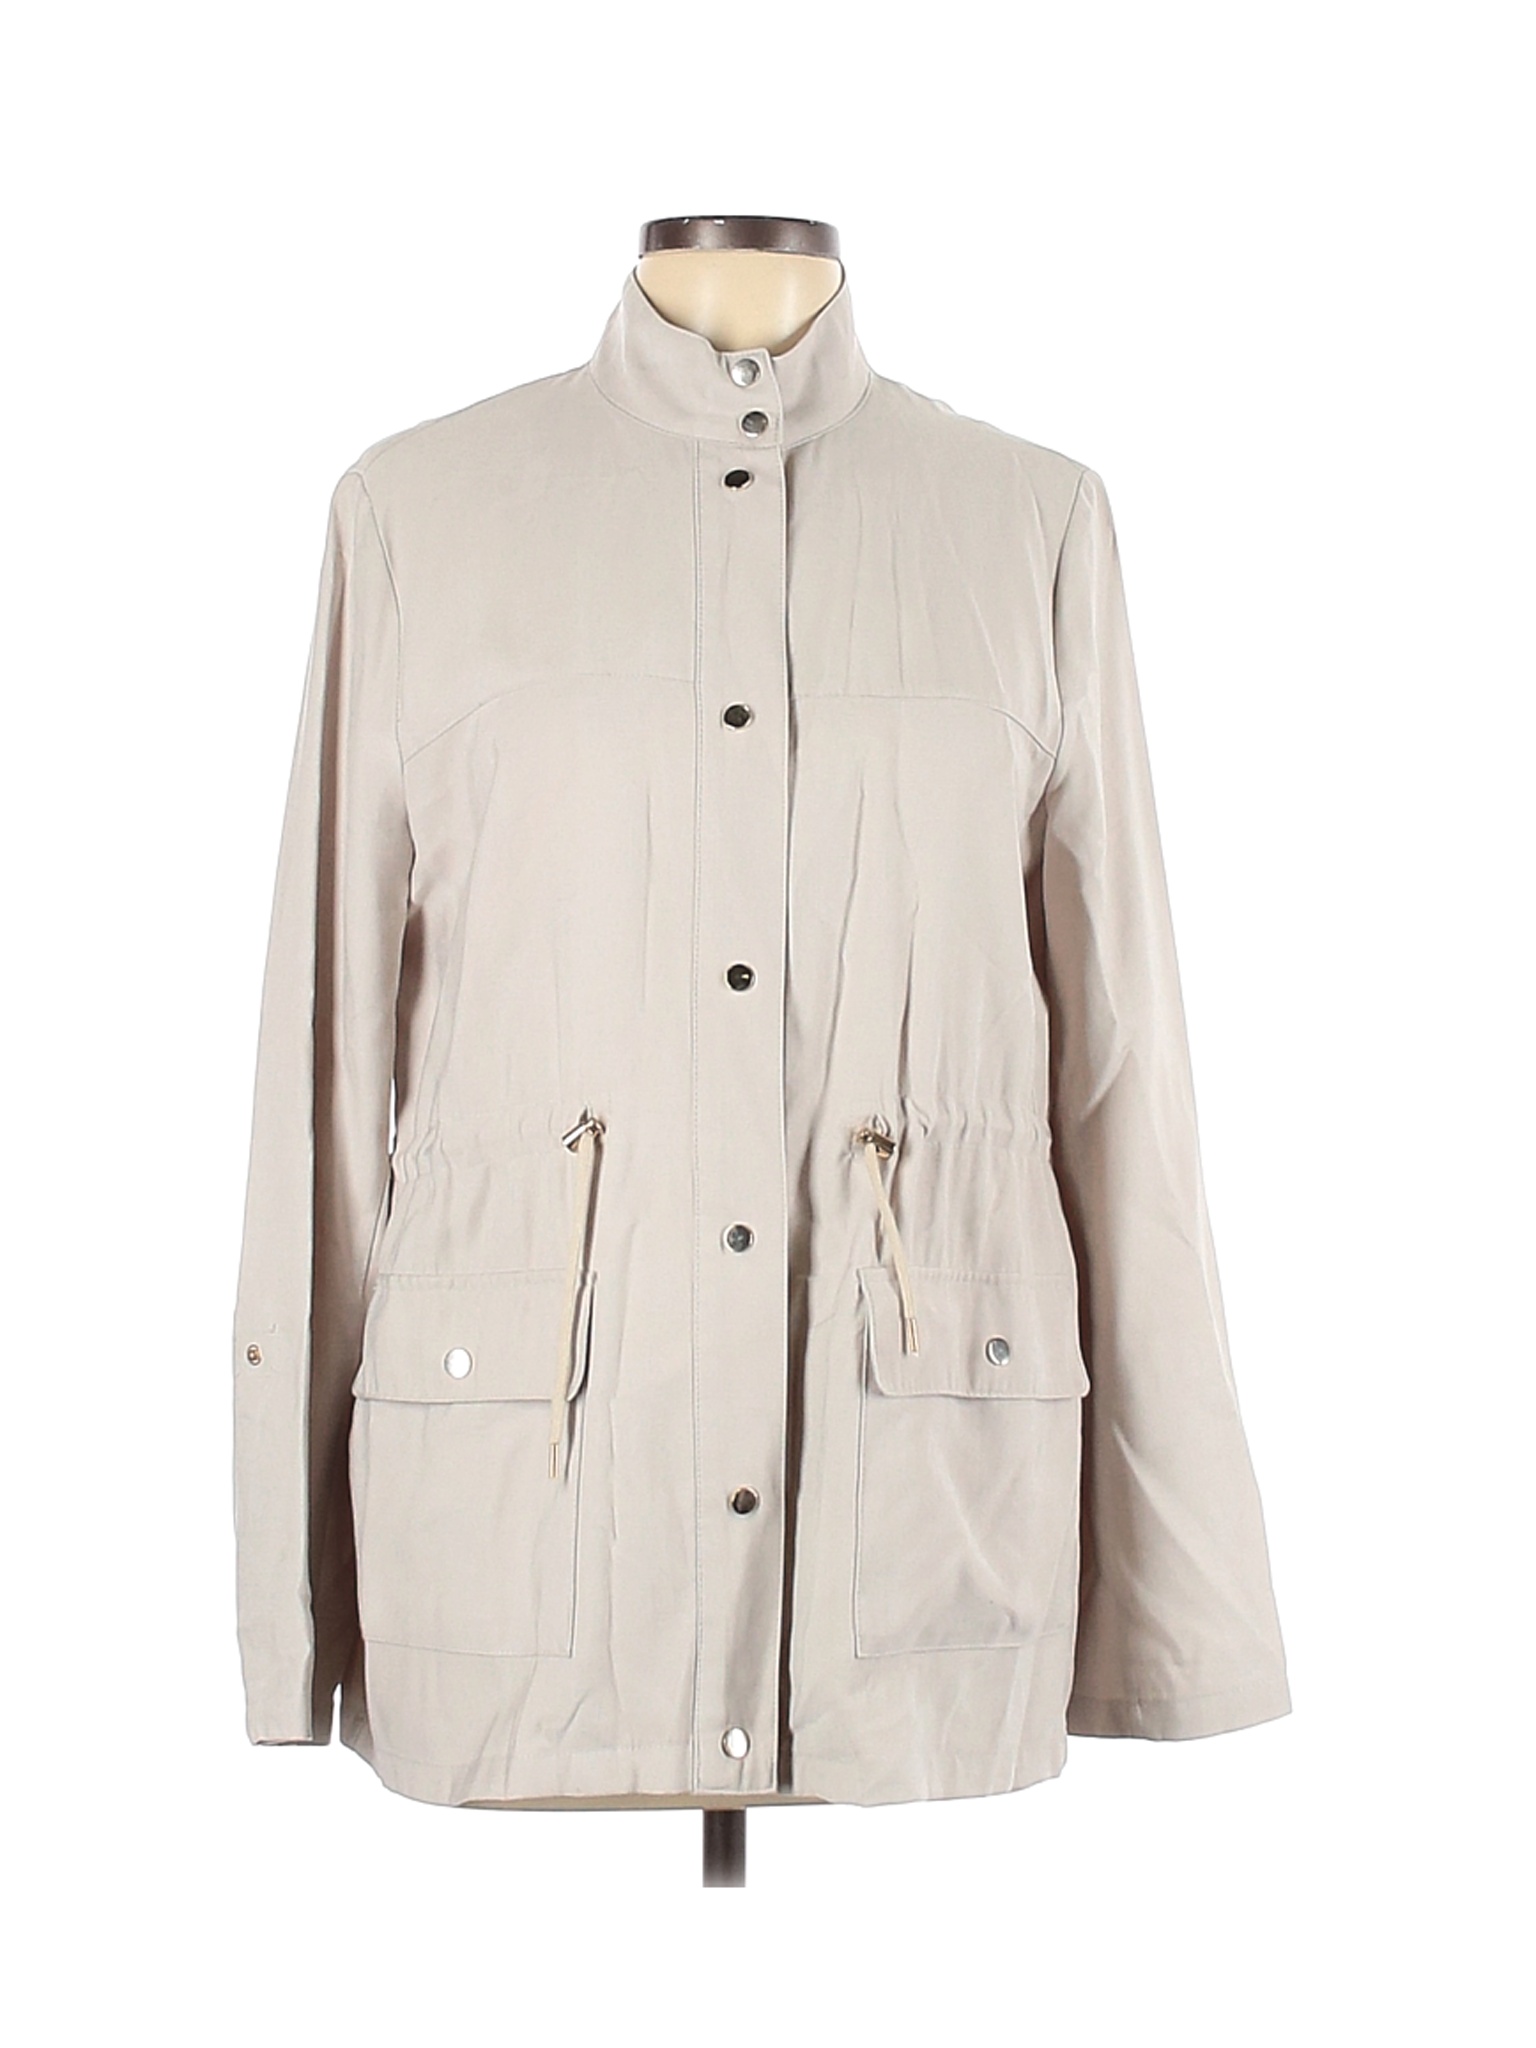 Zara Basic Women Brown Jacket L | eBay